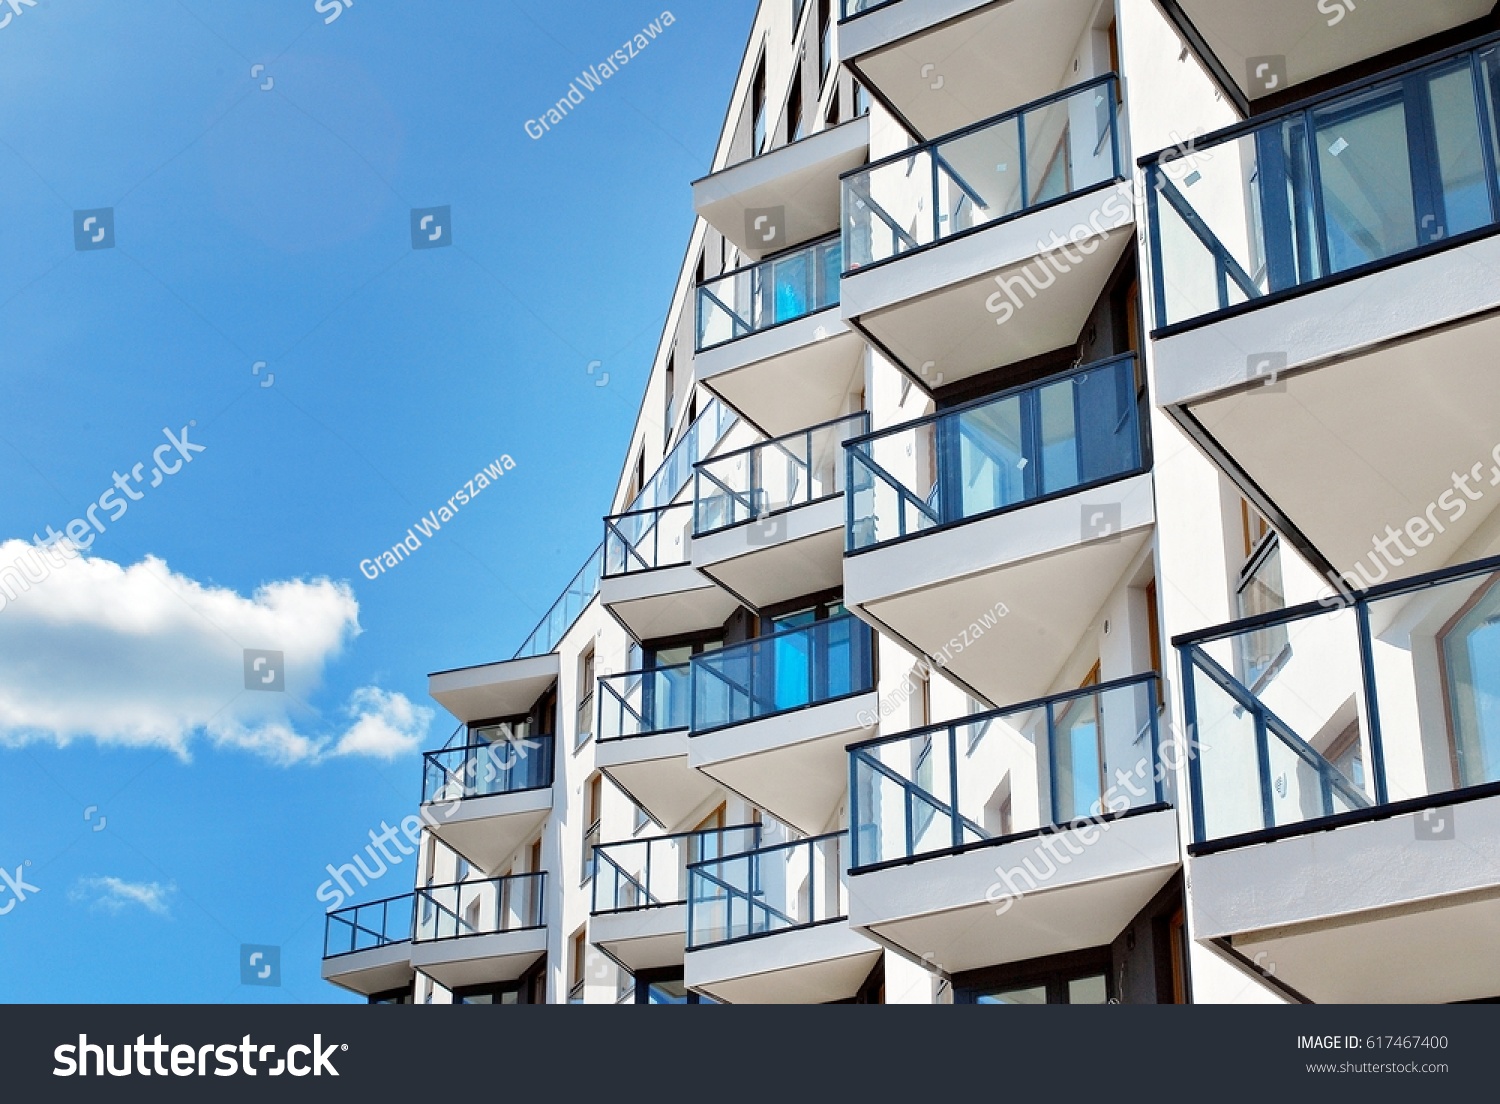 Modern, Luxury Apartment Building #617467400